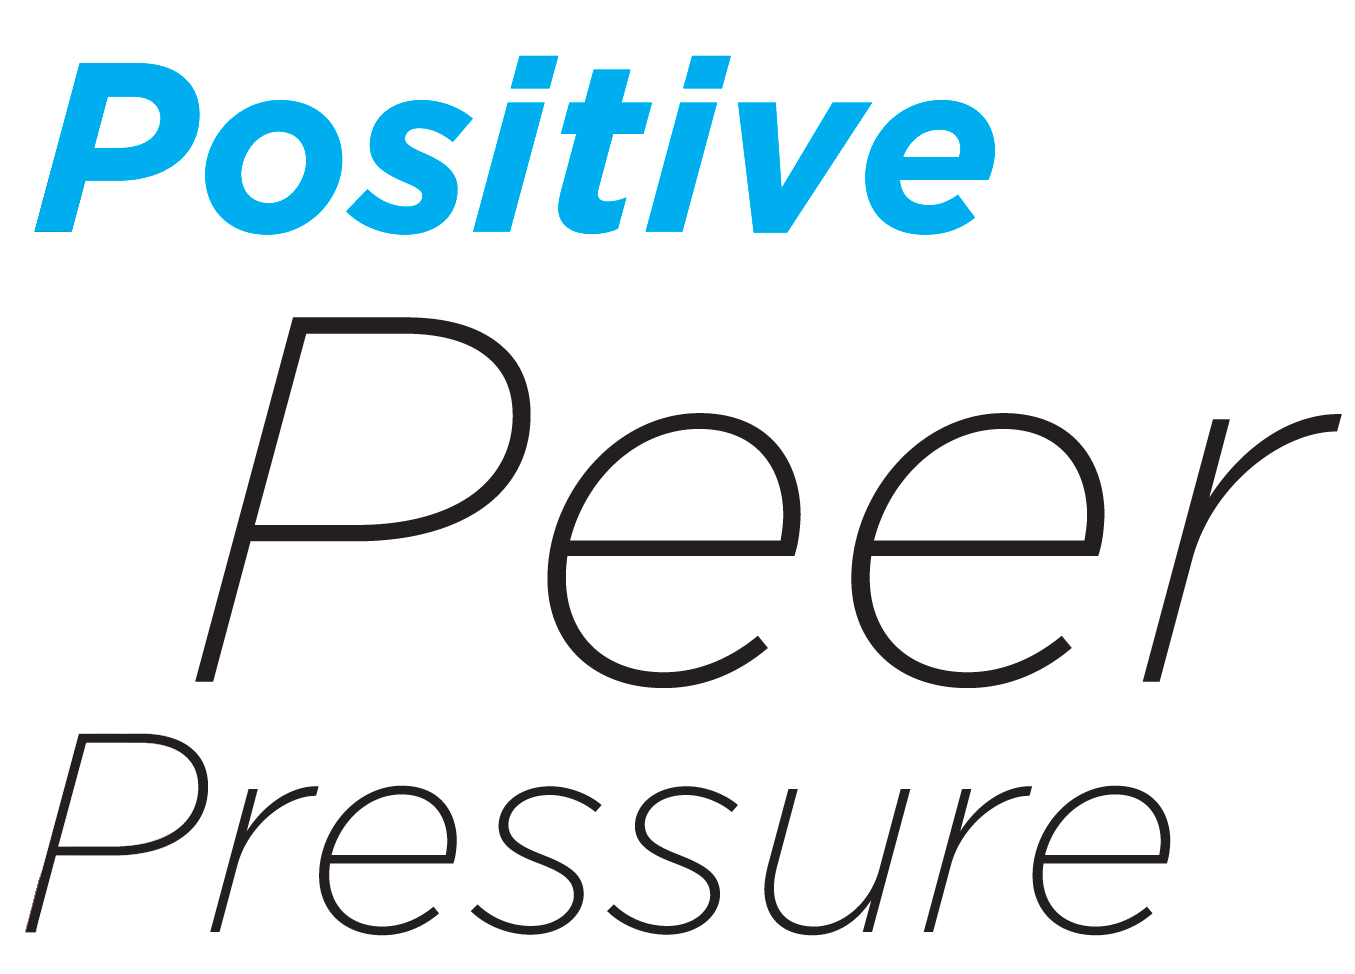 positive peer pressure clipart